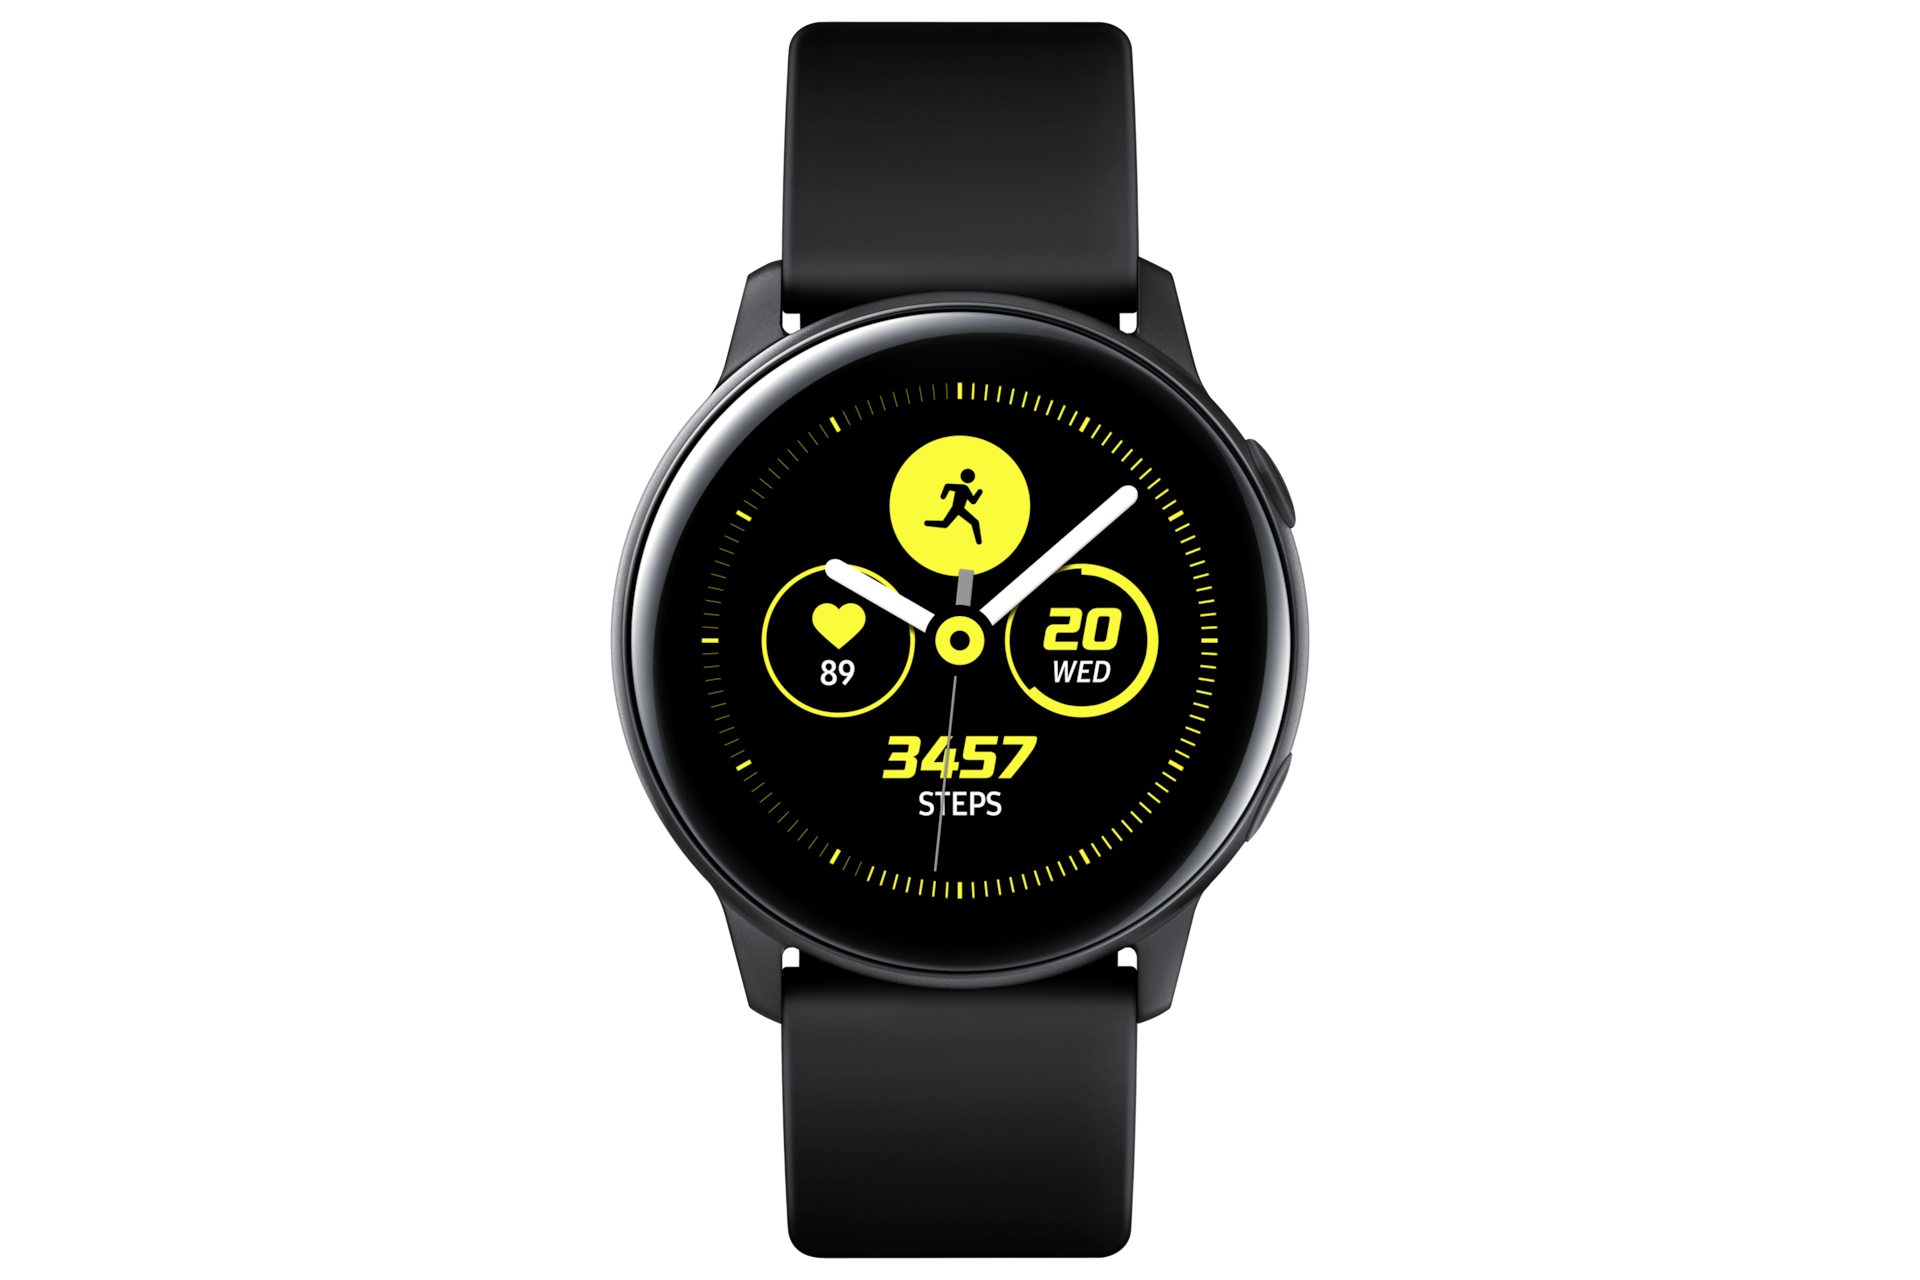 Samsung Galaxy Watch Active (2019, Black) Price in